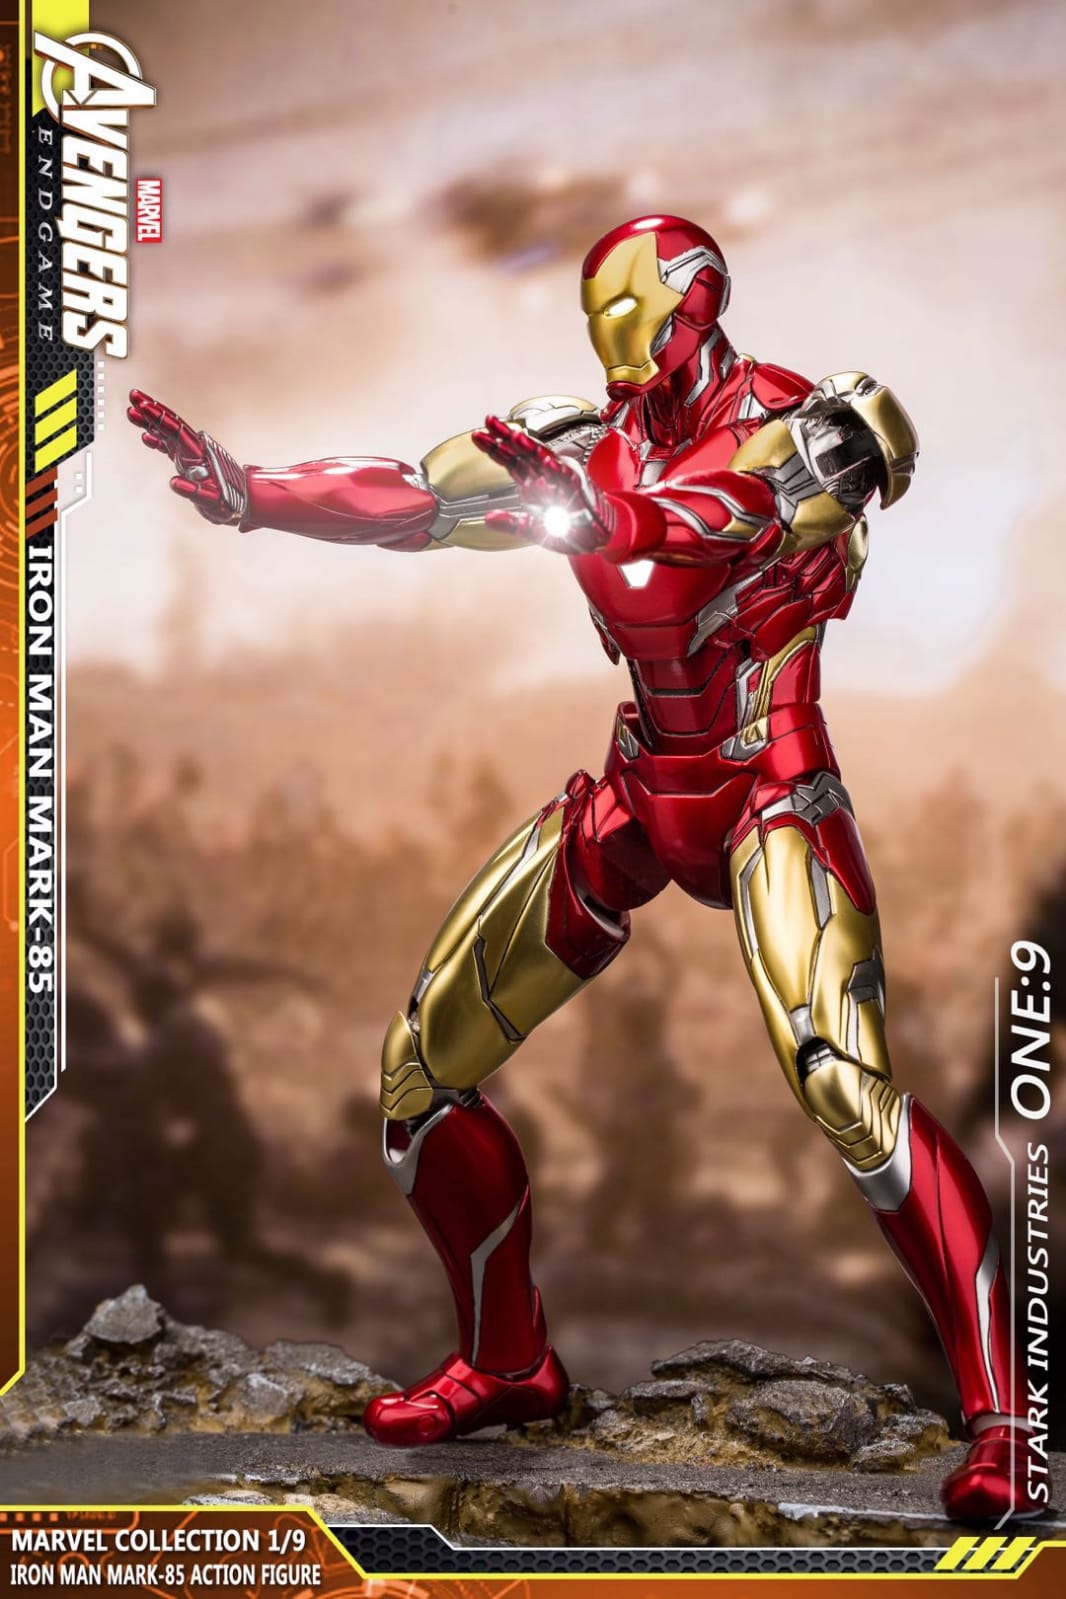 MIGu - Marvel Collection: Avengers Endgame Iron Man Mark-85 – Toybot